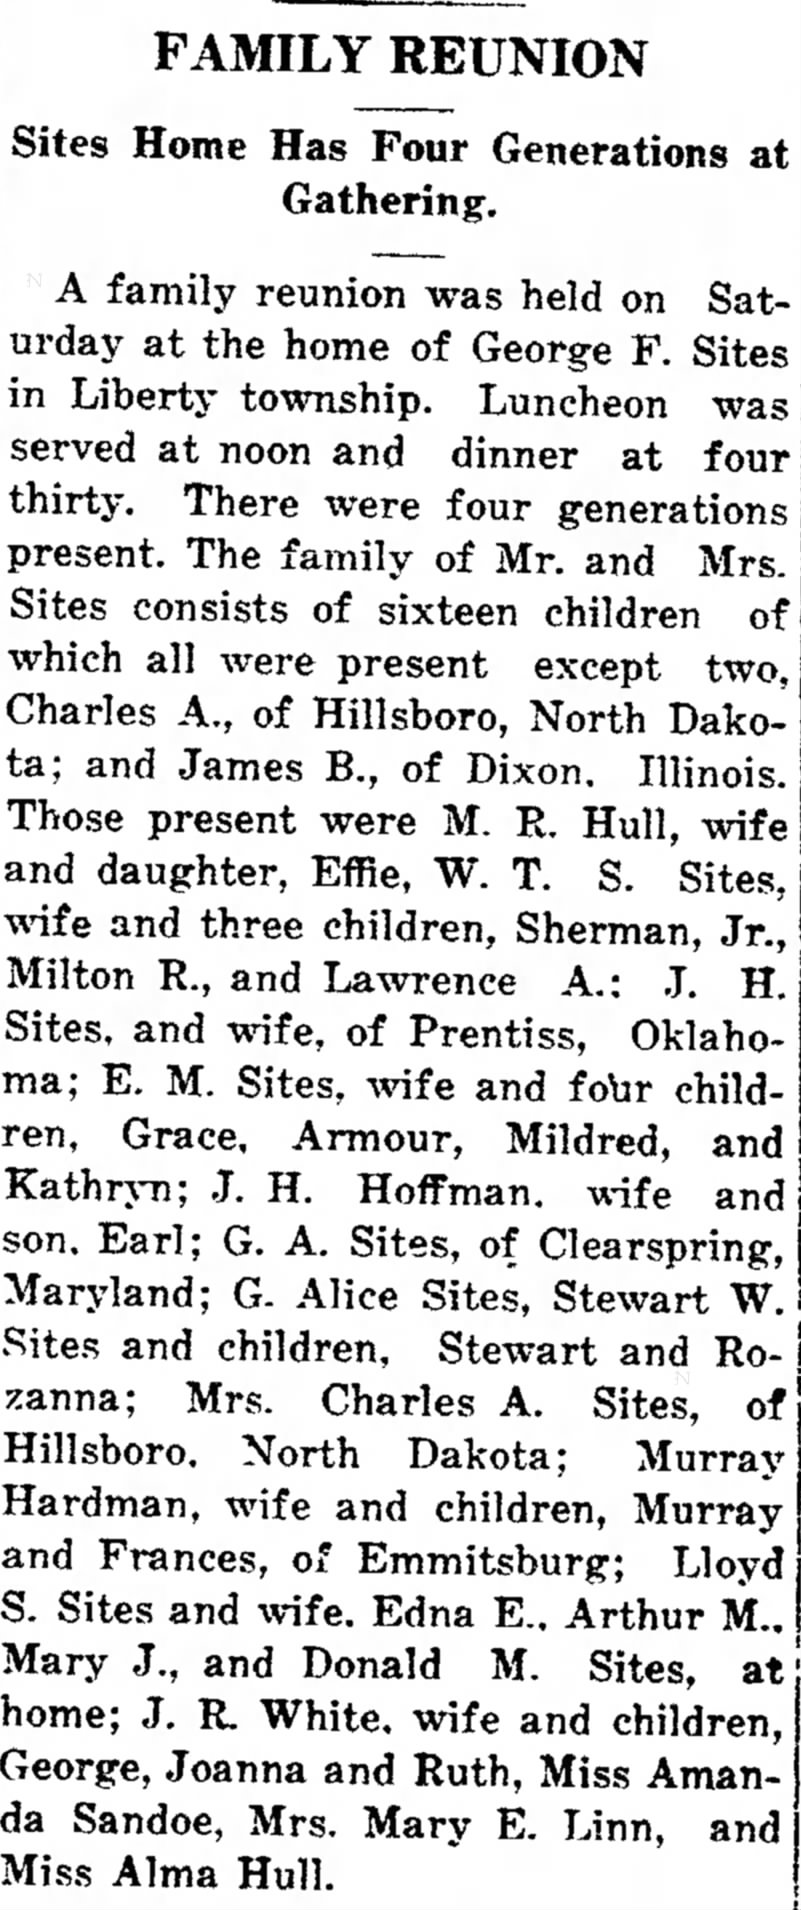 Sites Family Reunion 1915